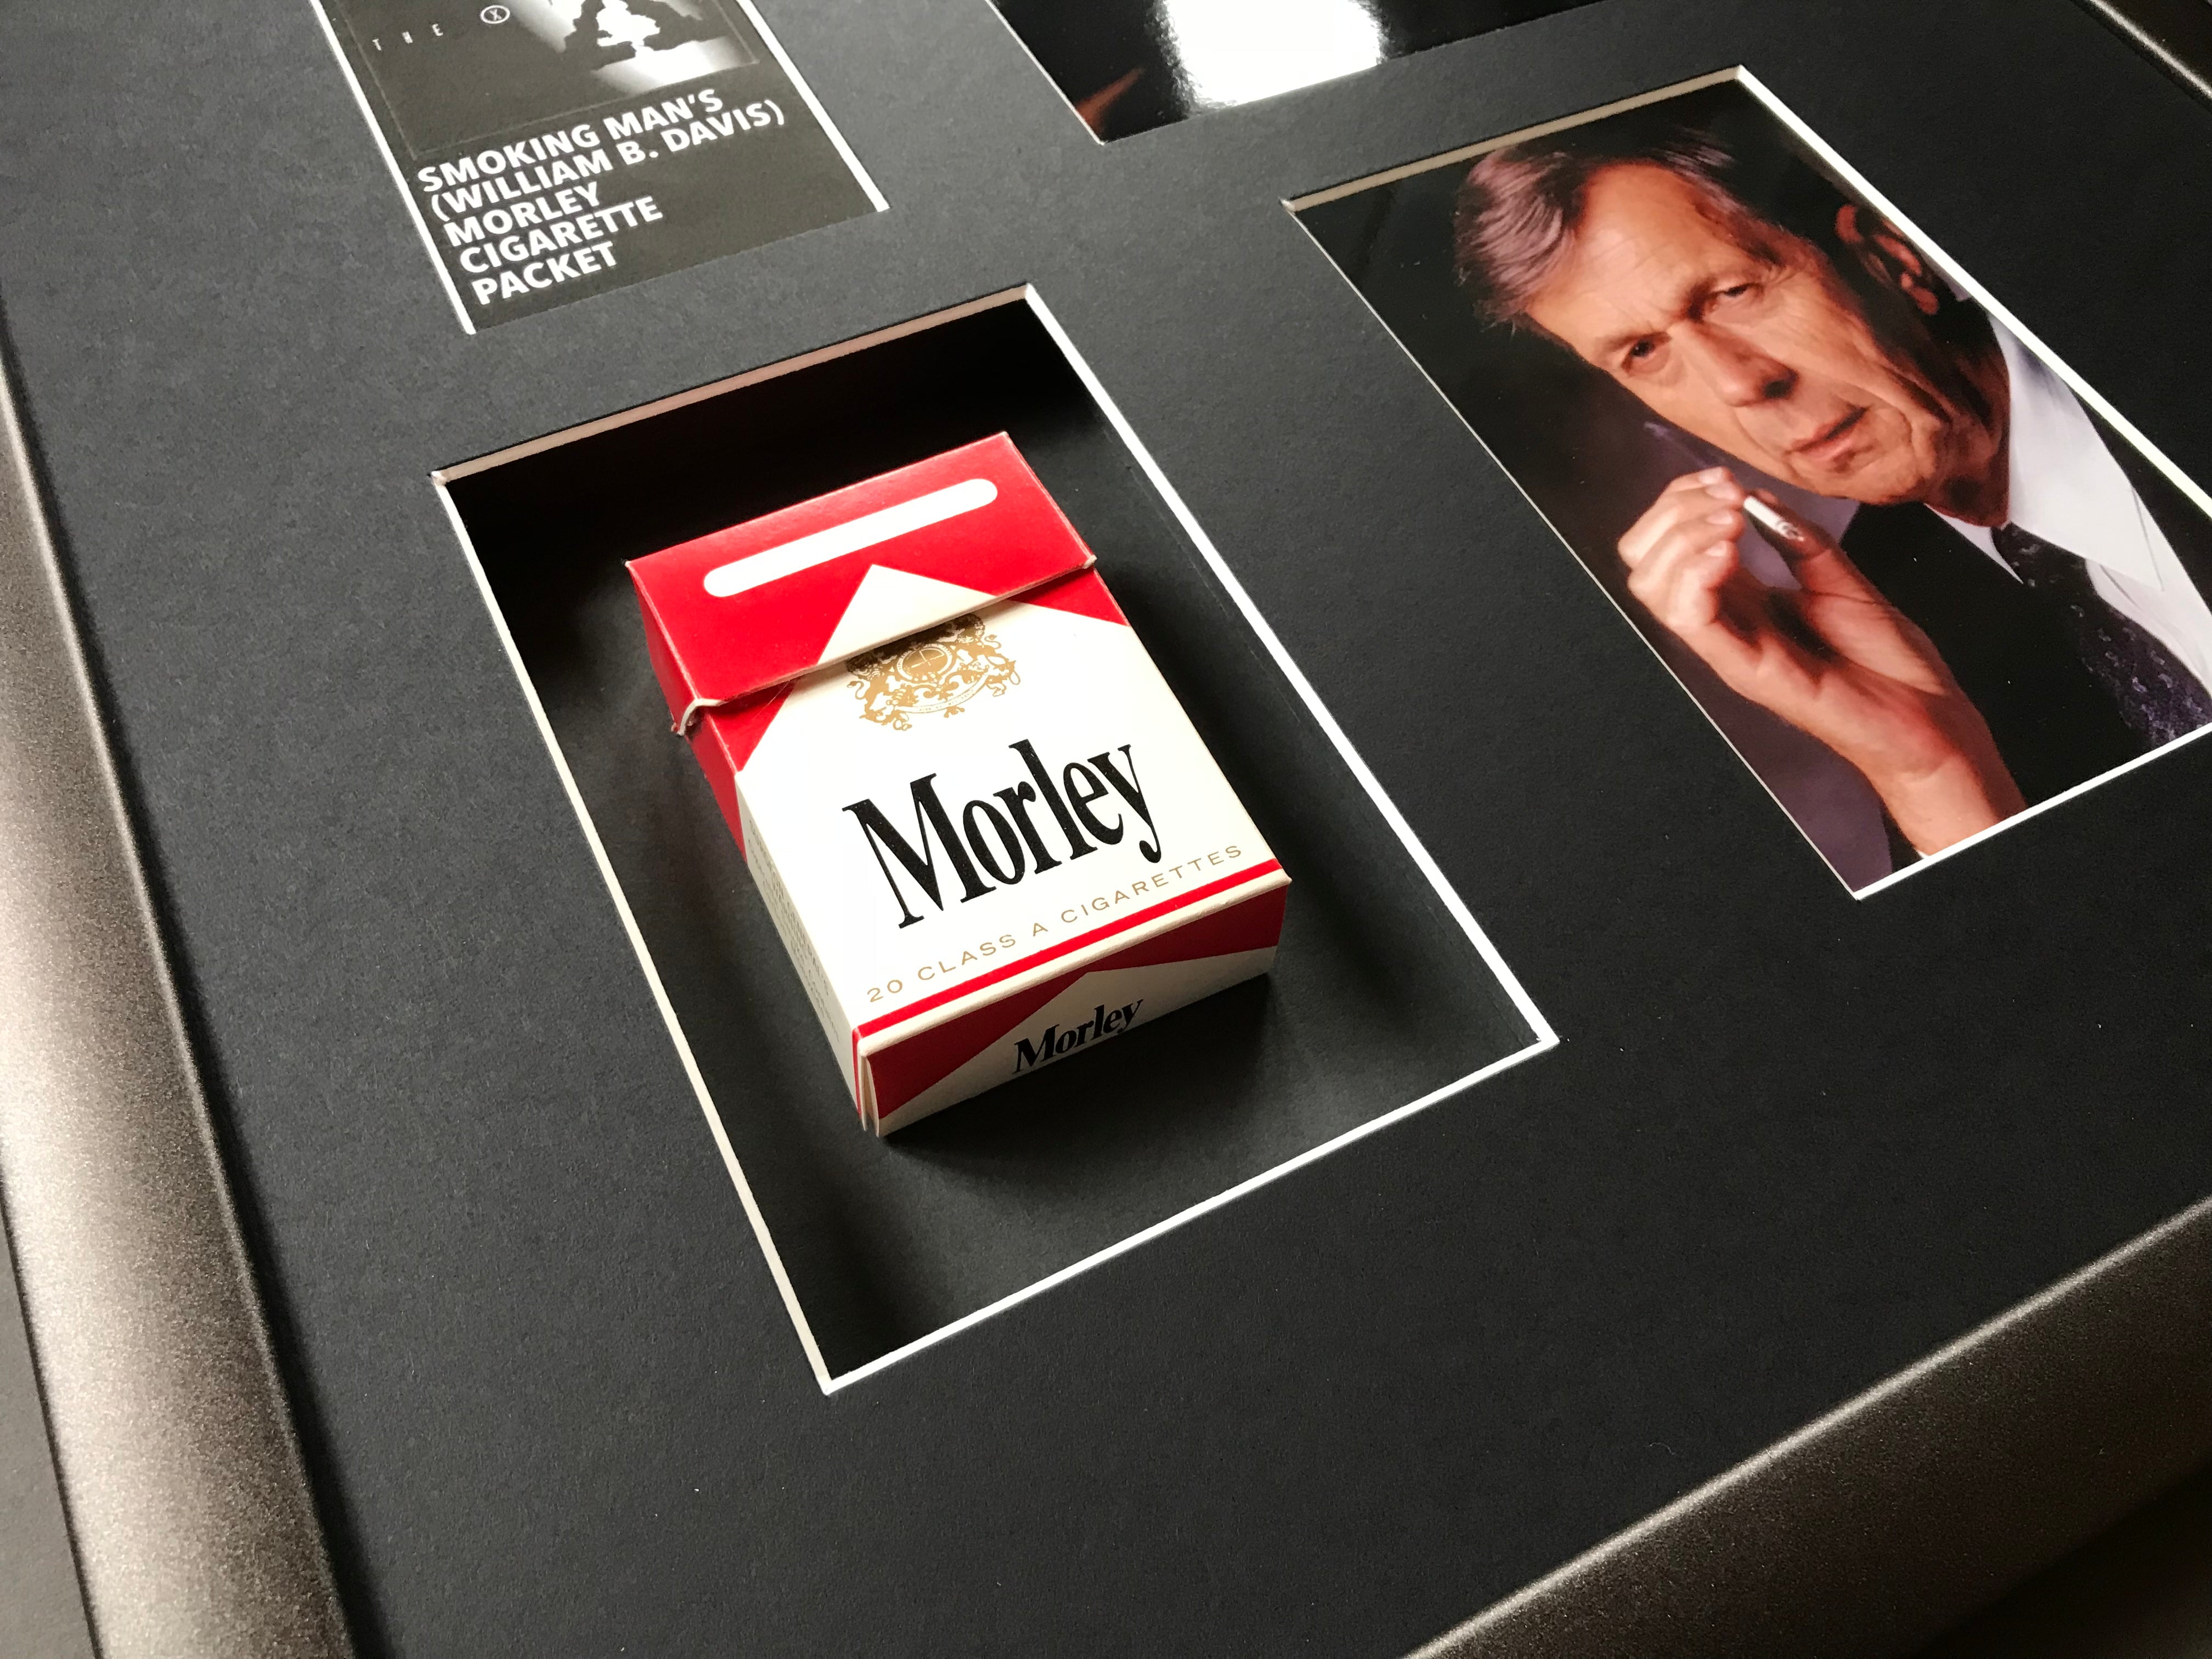 The X-Files - Smoking Man’s (William B. Davis) Morley Cigarette Packet (SOLD)